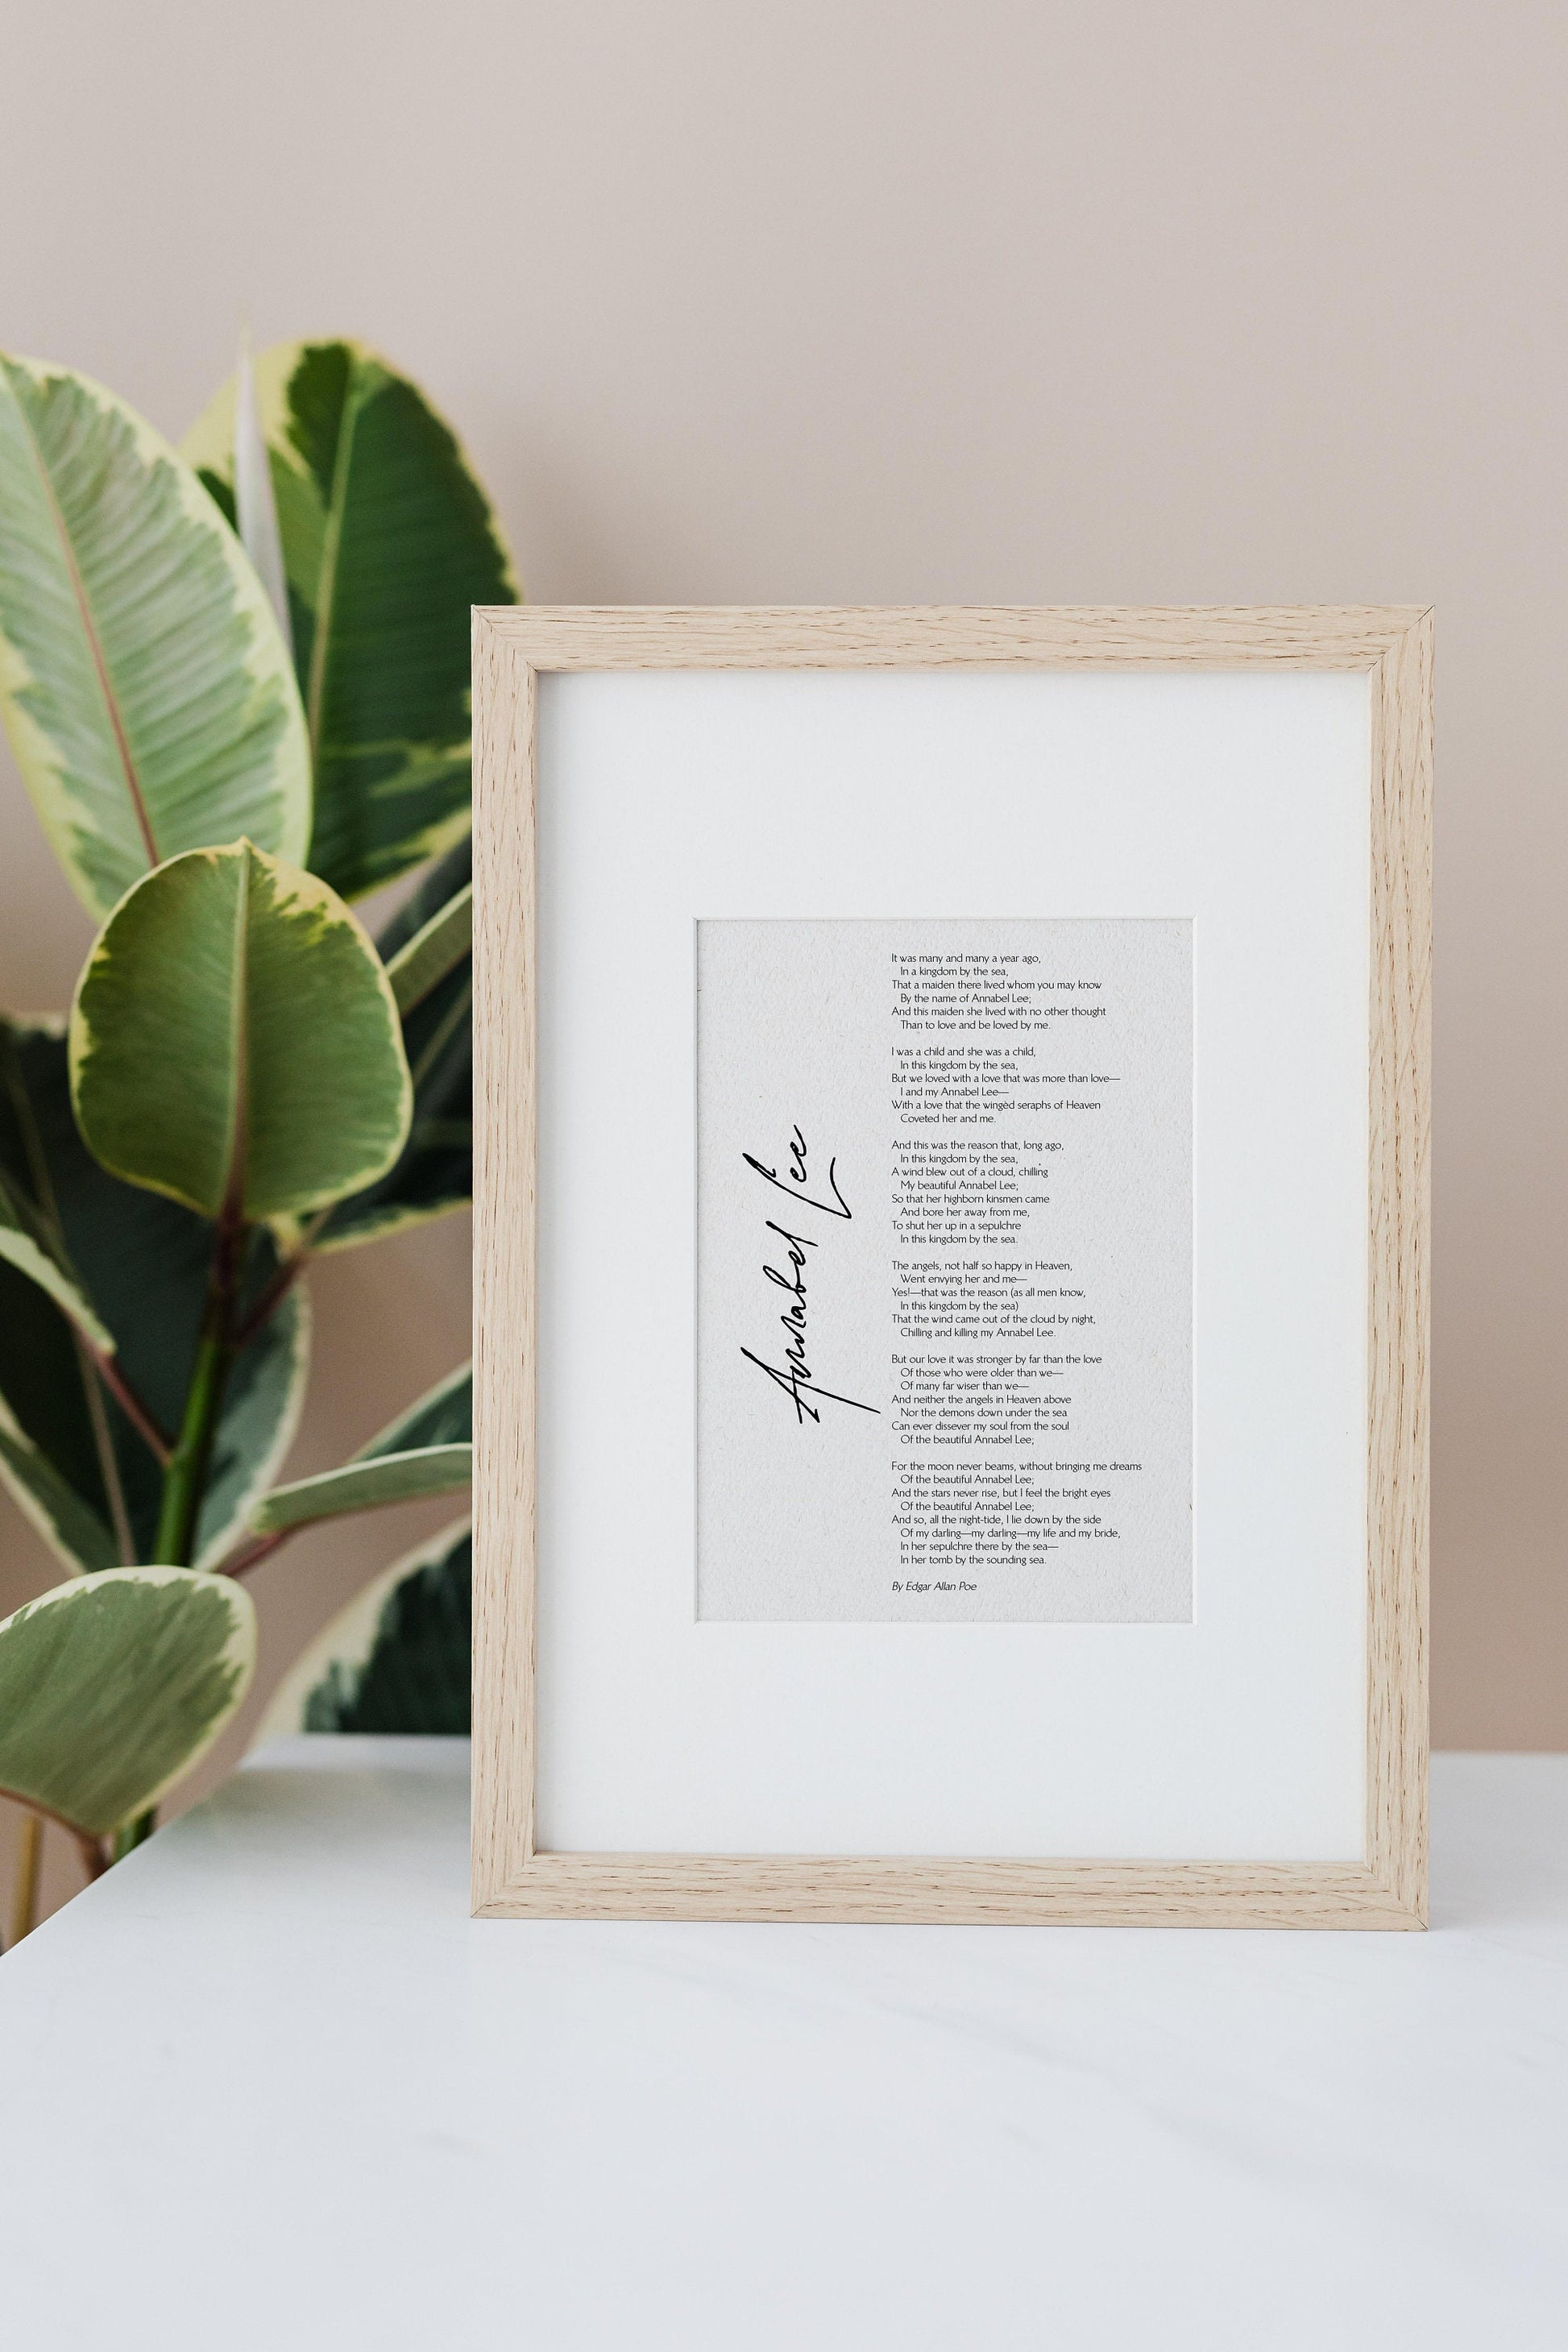 Annabel Lee Poem, Romantic Love Poem, Gift for her, lovers gift anniversary gift, gift for girlfriend / wife Framed print by Edgar Allan Poe